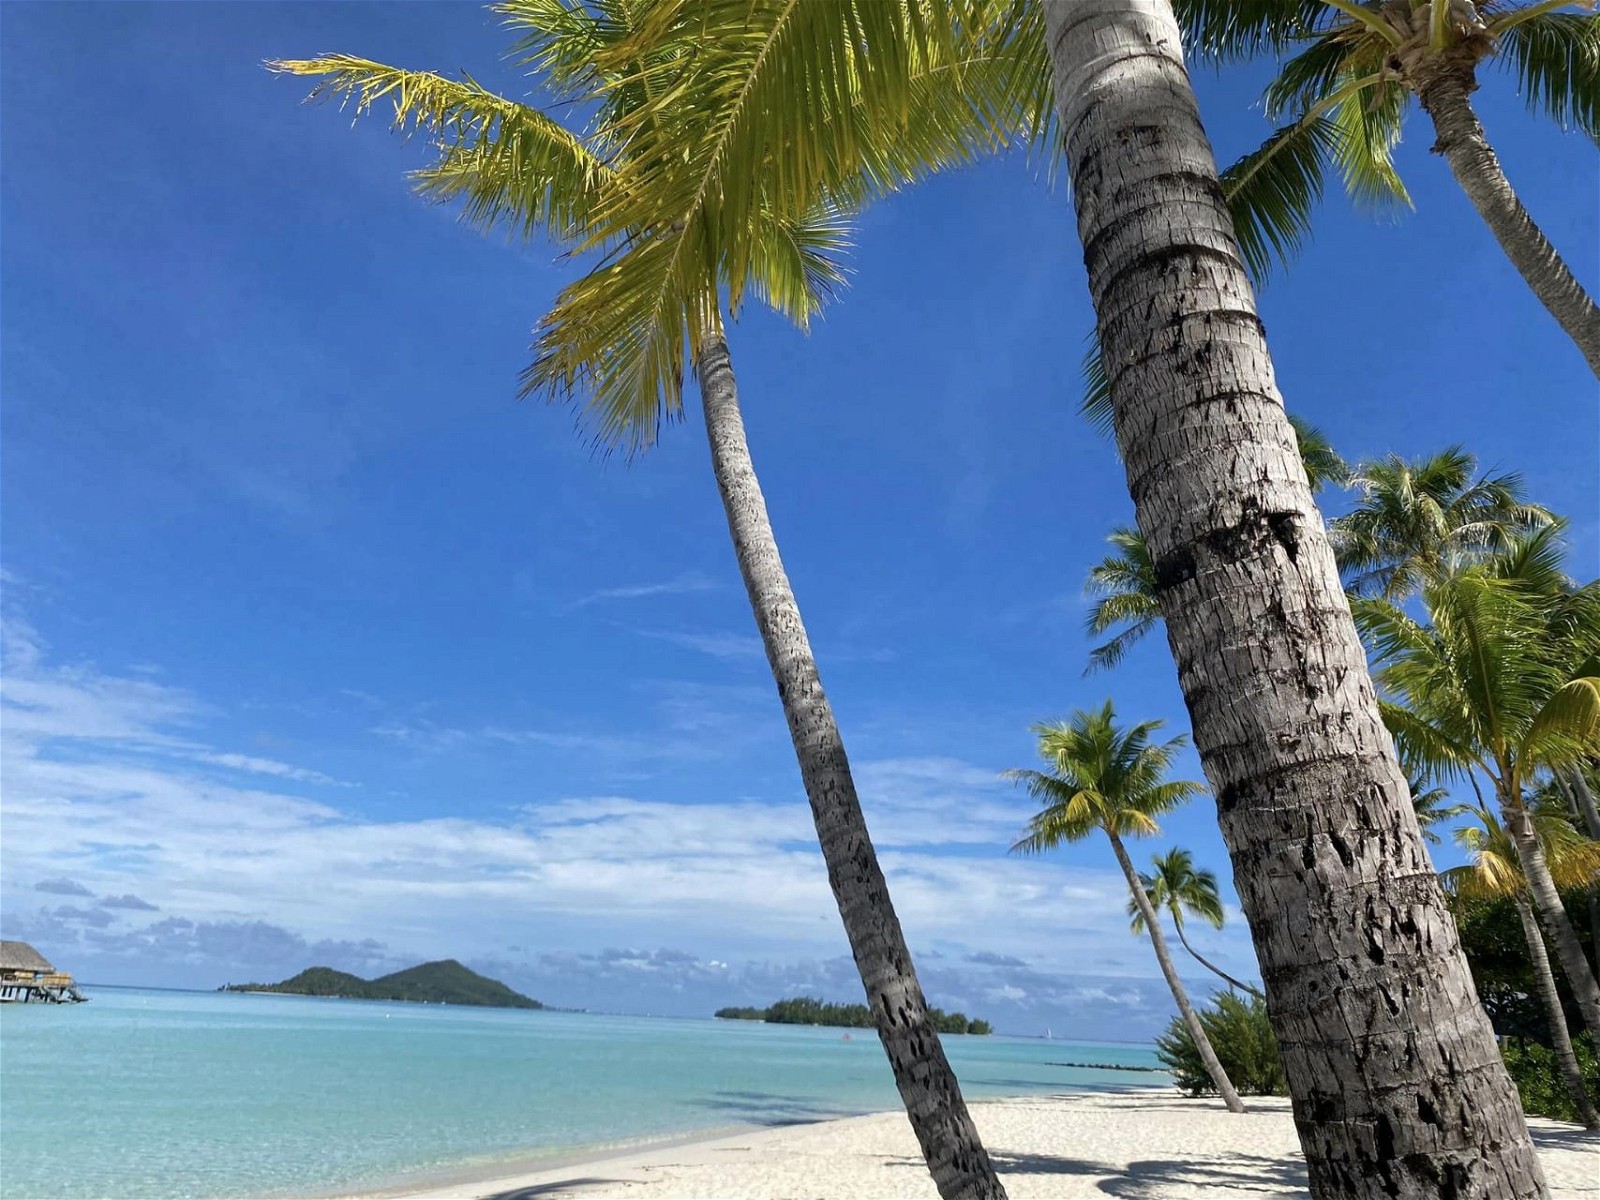 How to Get to Bora Bora Beach? Nearest Airport and Average Airfare